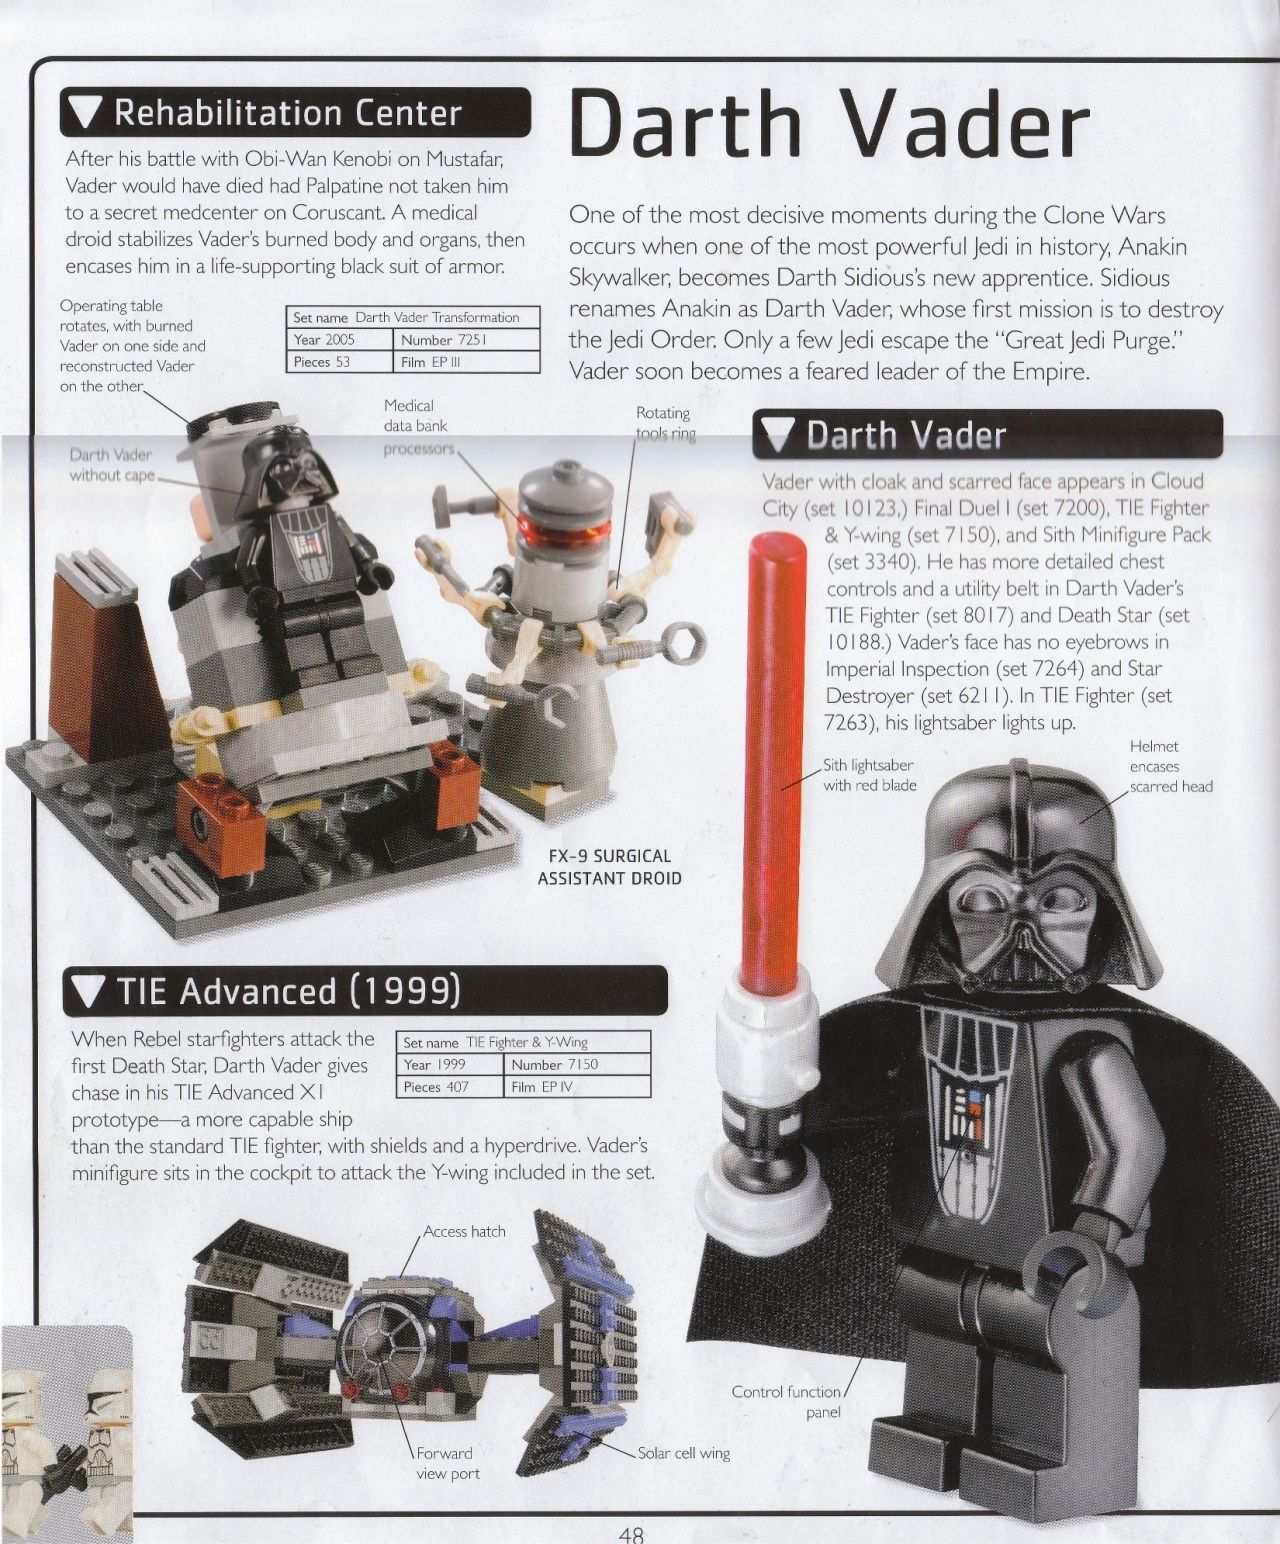 Lego Star Wars The Visual Dictionary 2009 Lego Star Wars The Visual Dictionary 2009 49